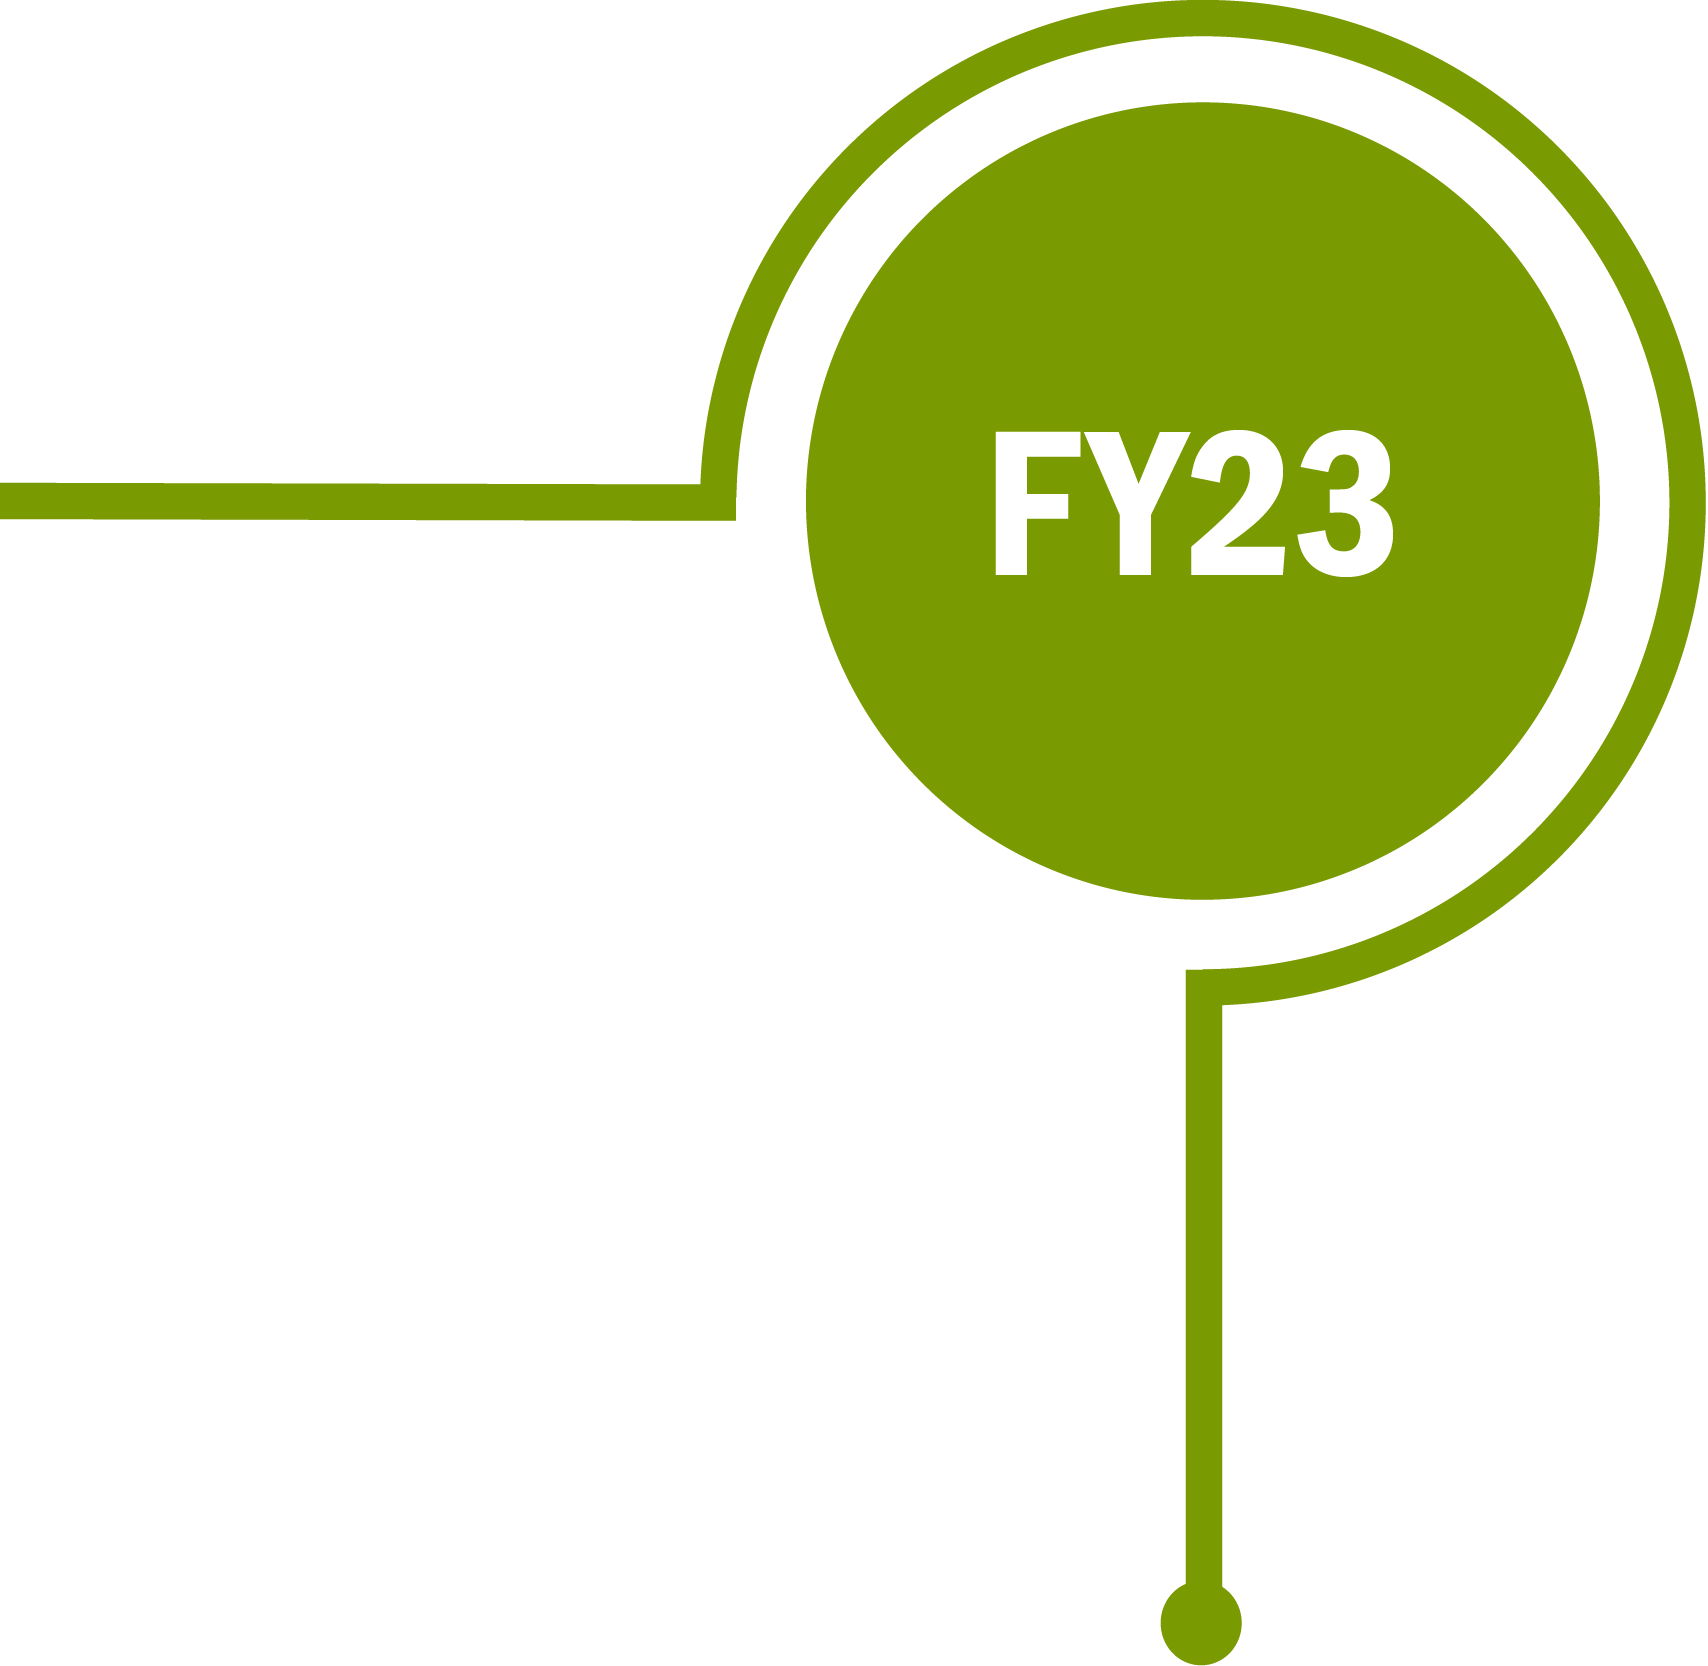 FY23 green bubble